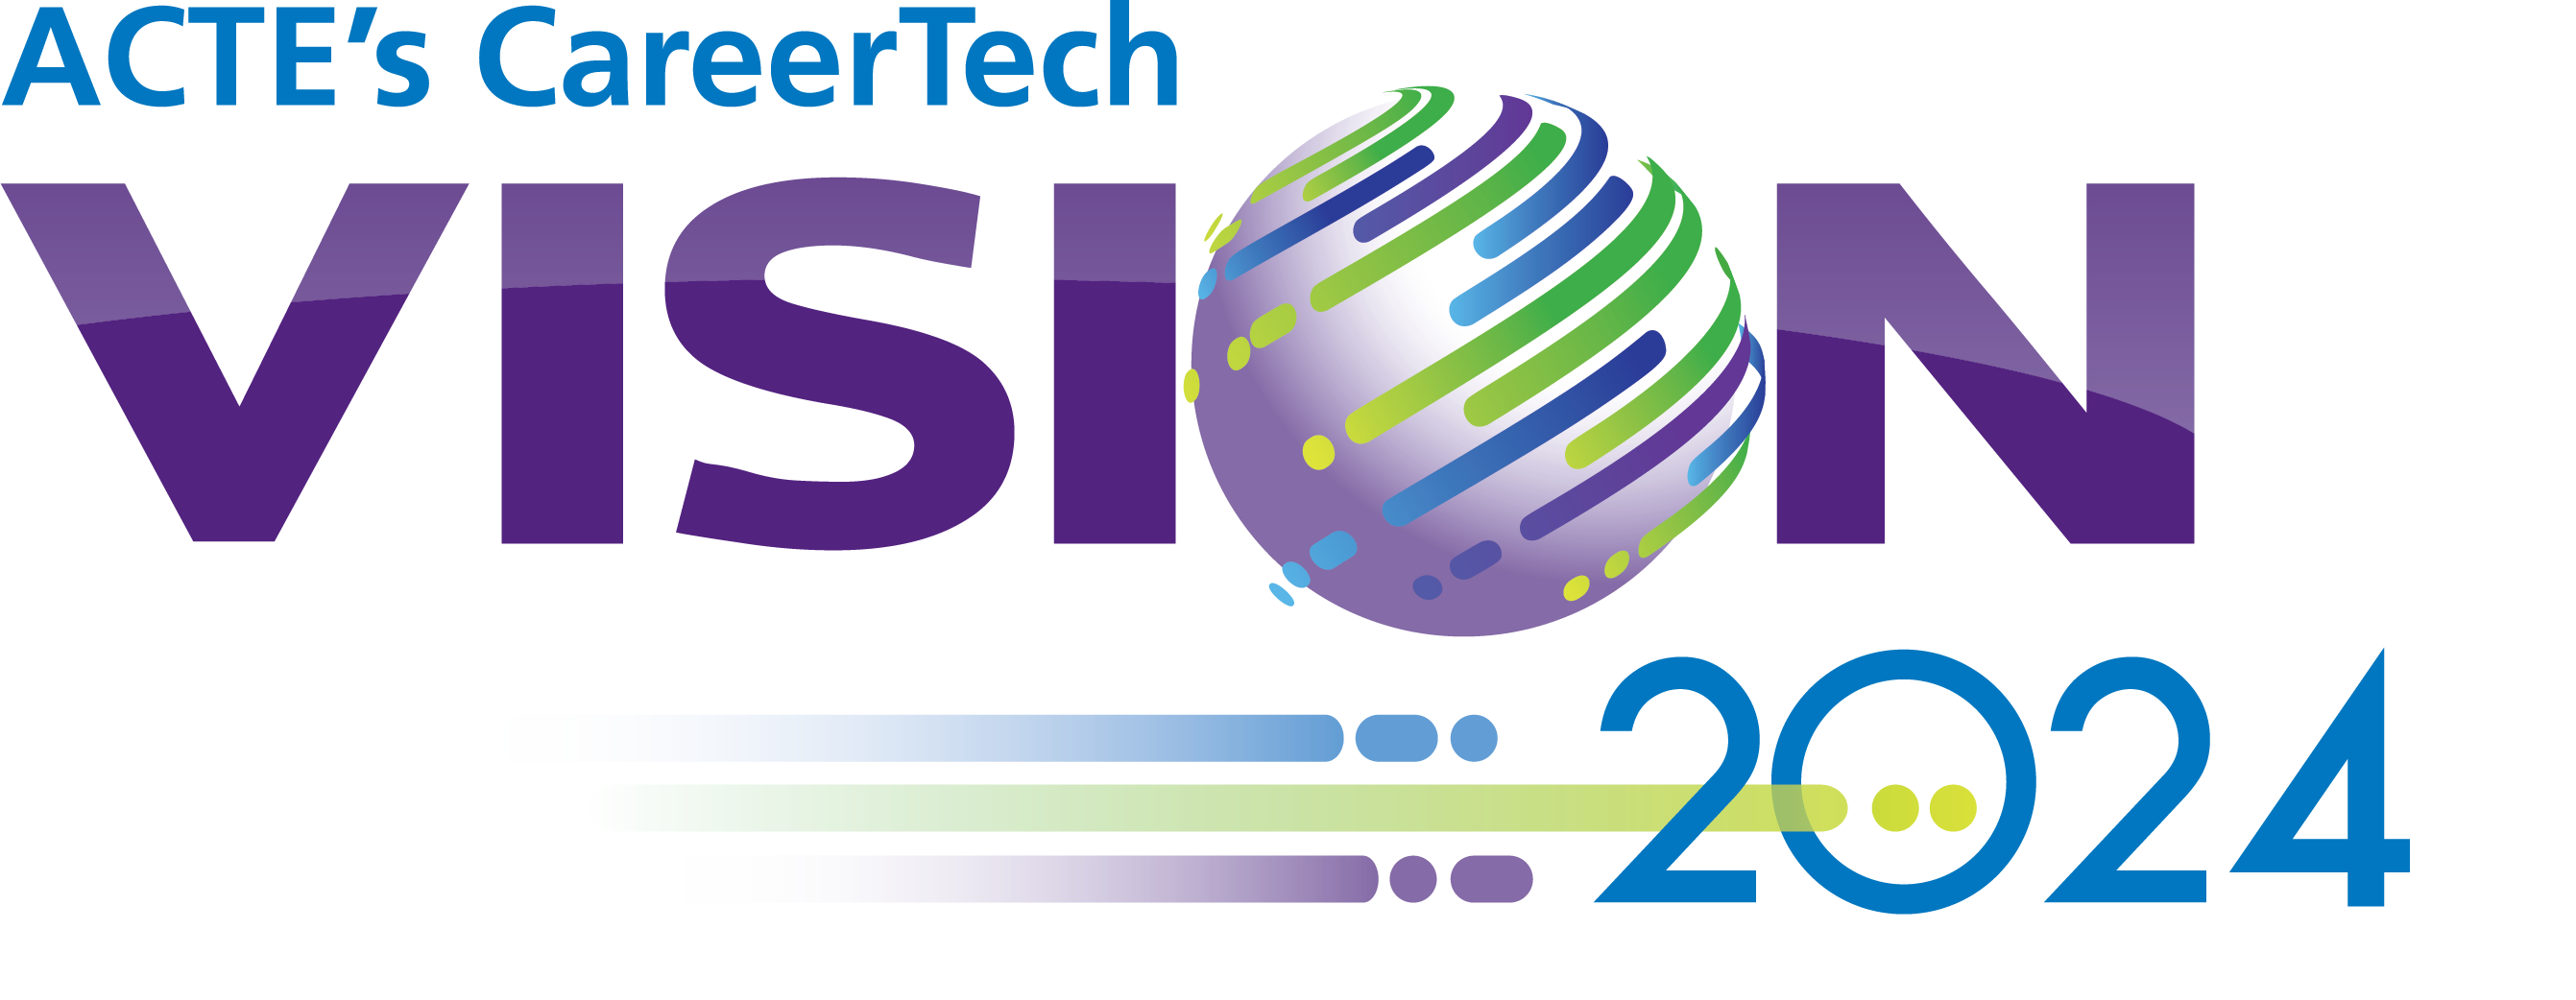 ACTE CareerTech VISION 2024 logo